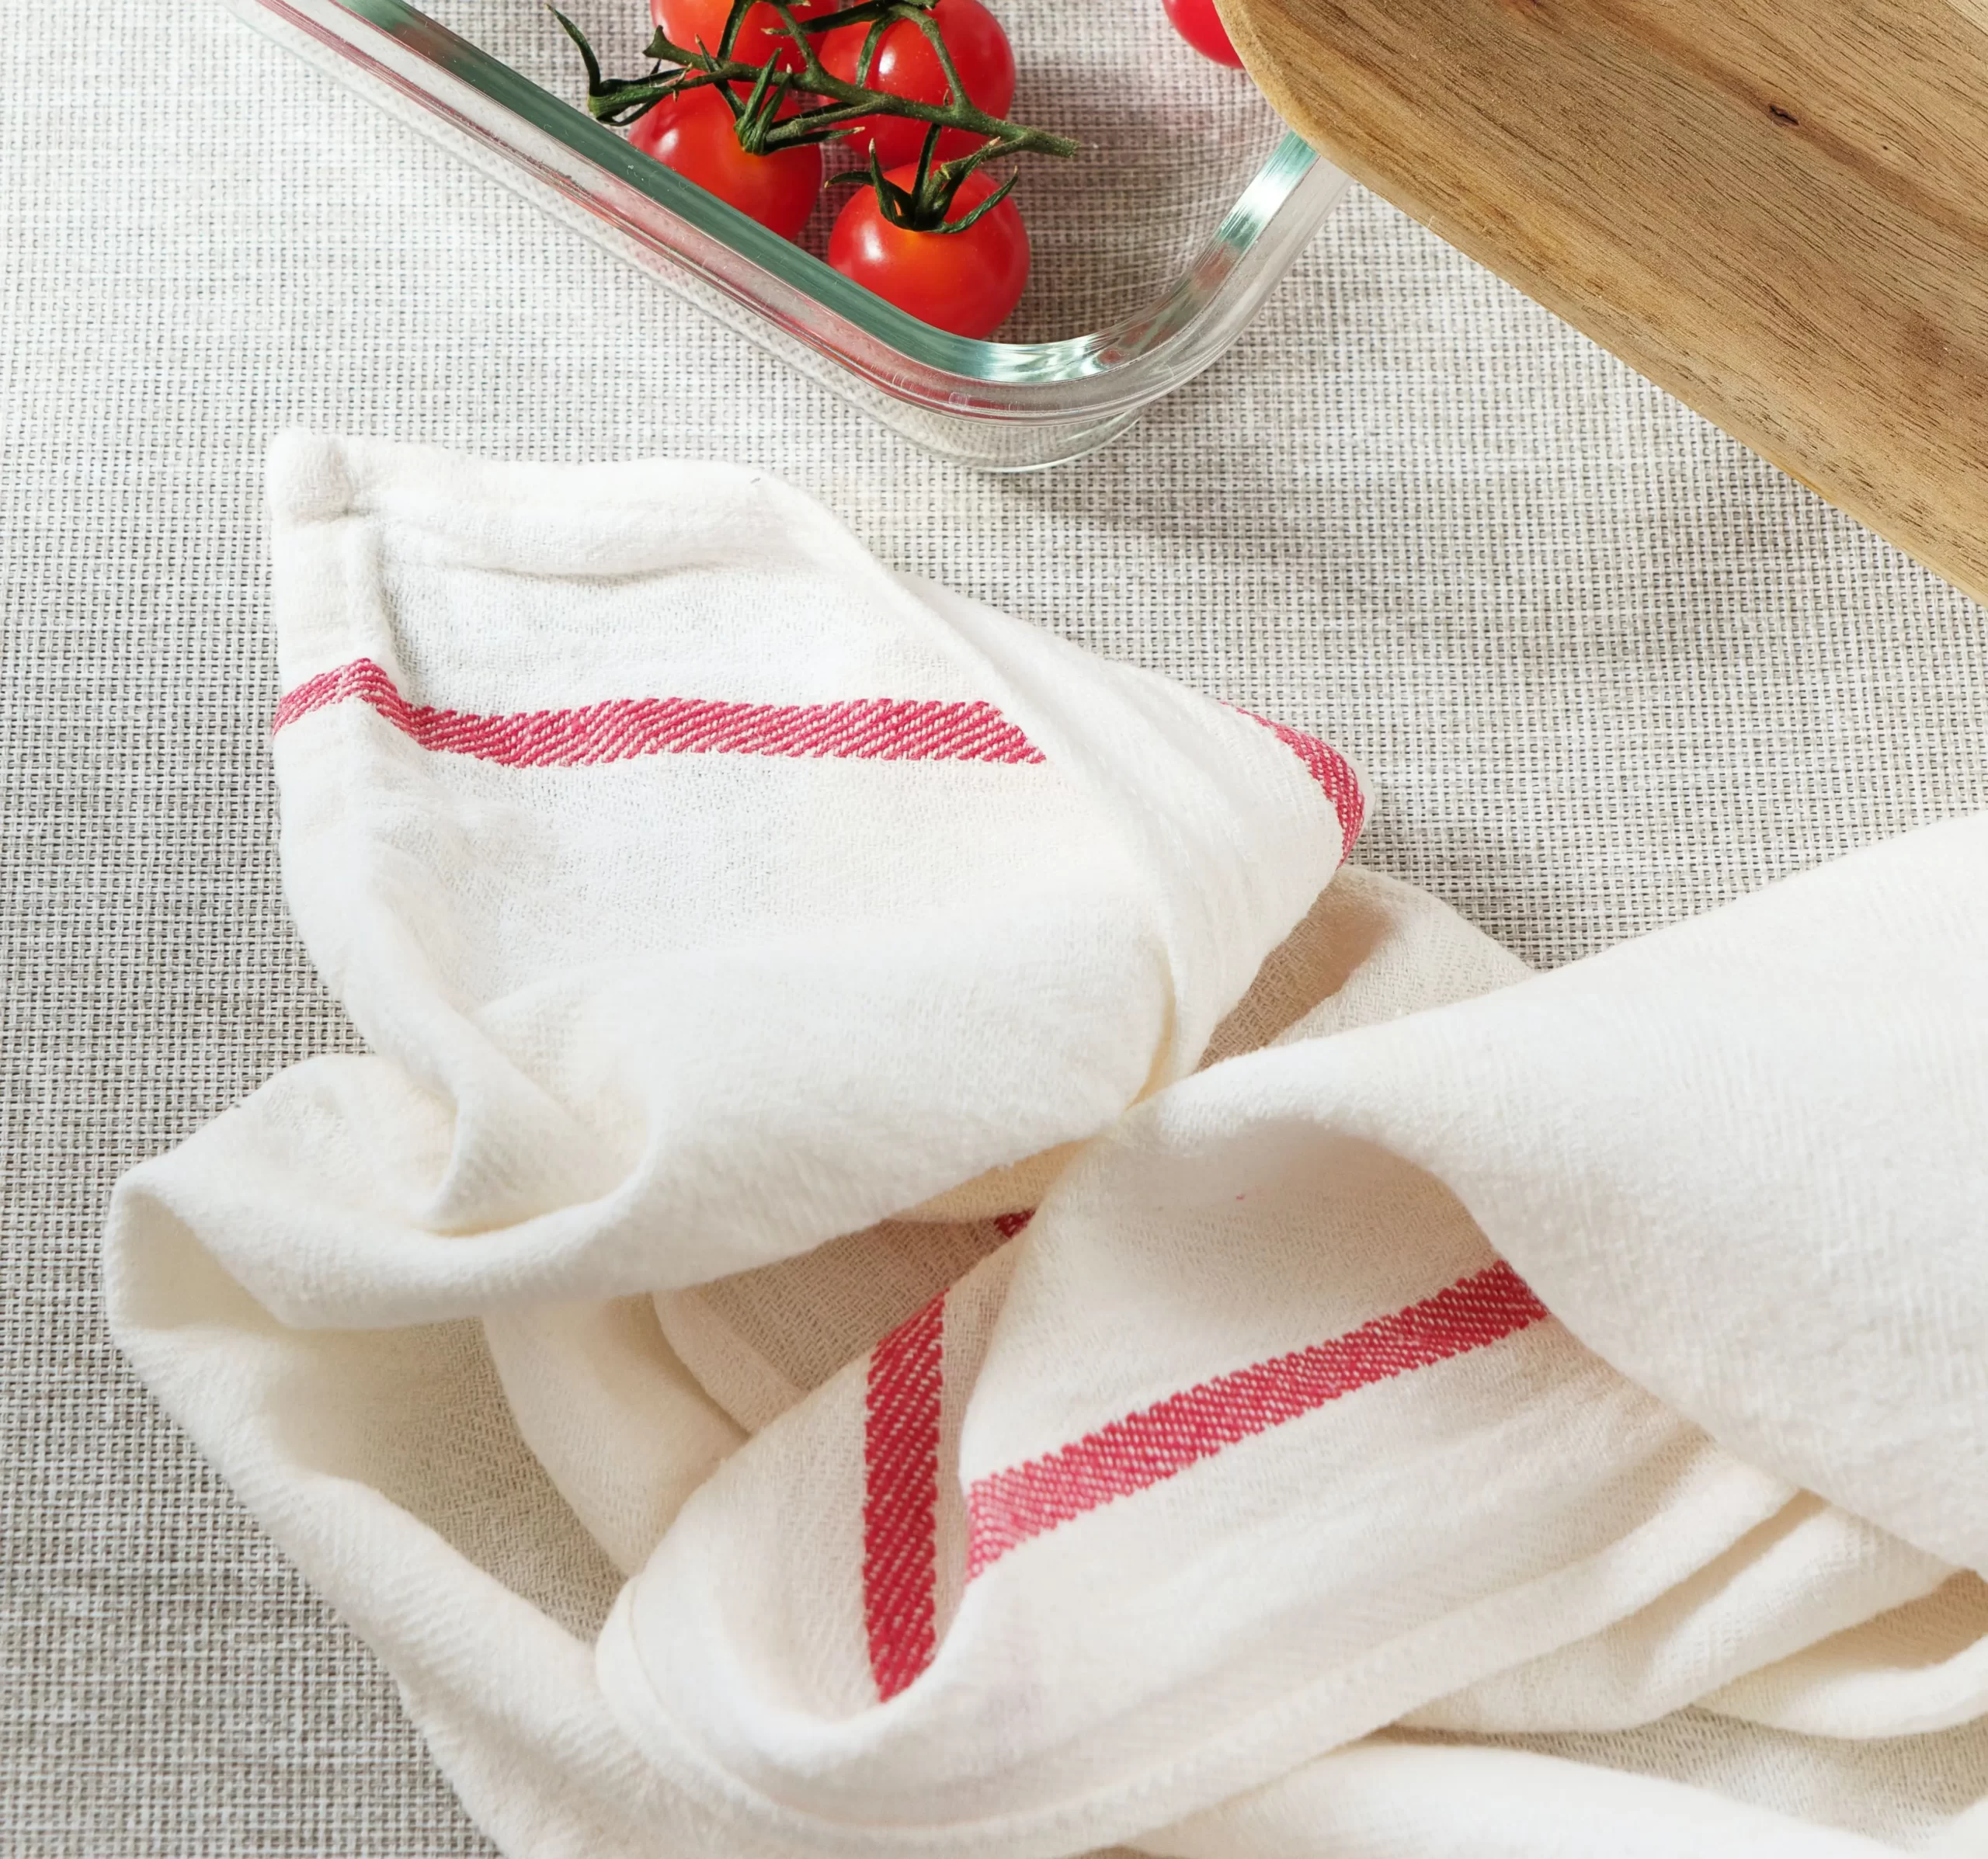 Kitchen towel manufacturers